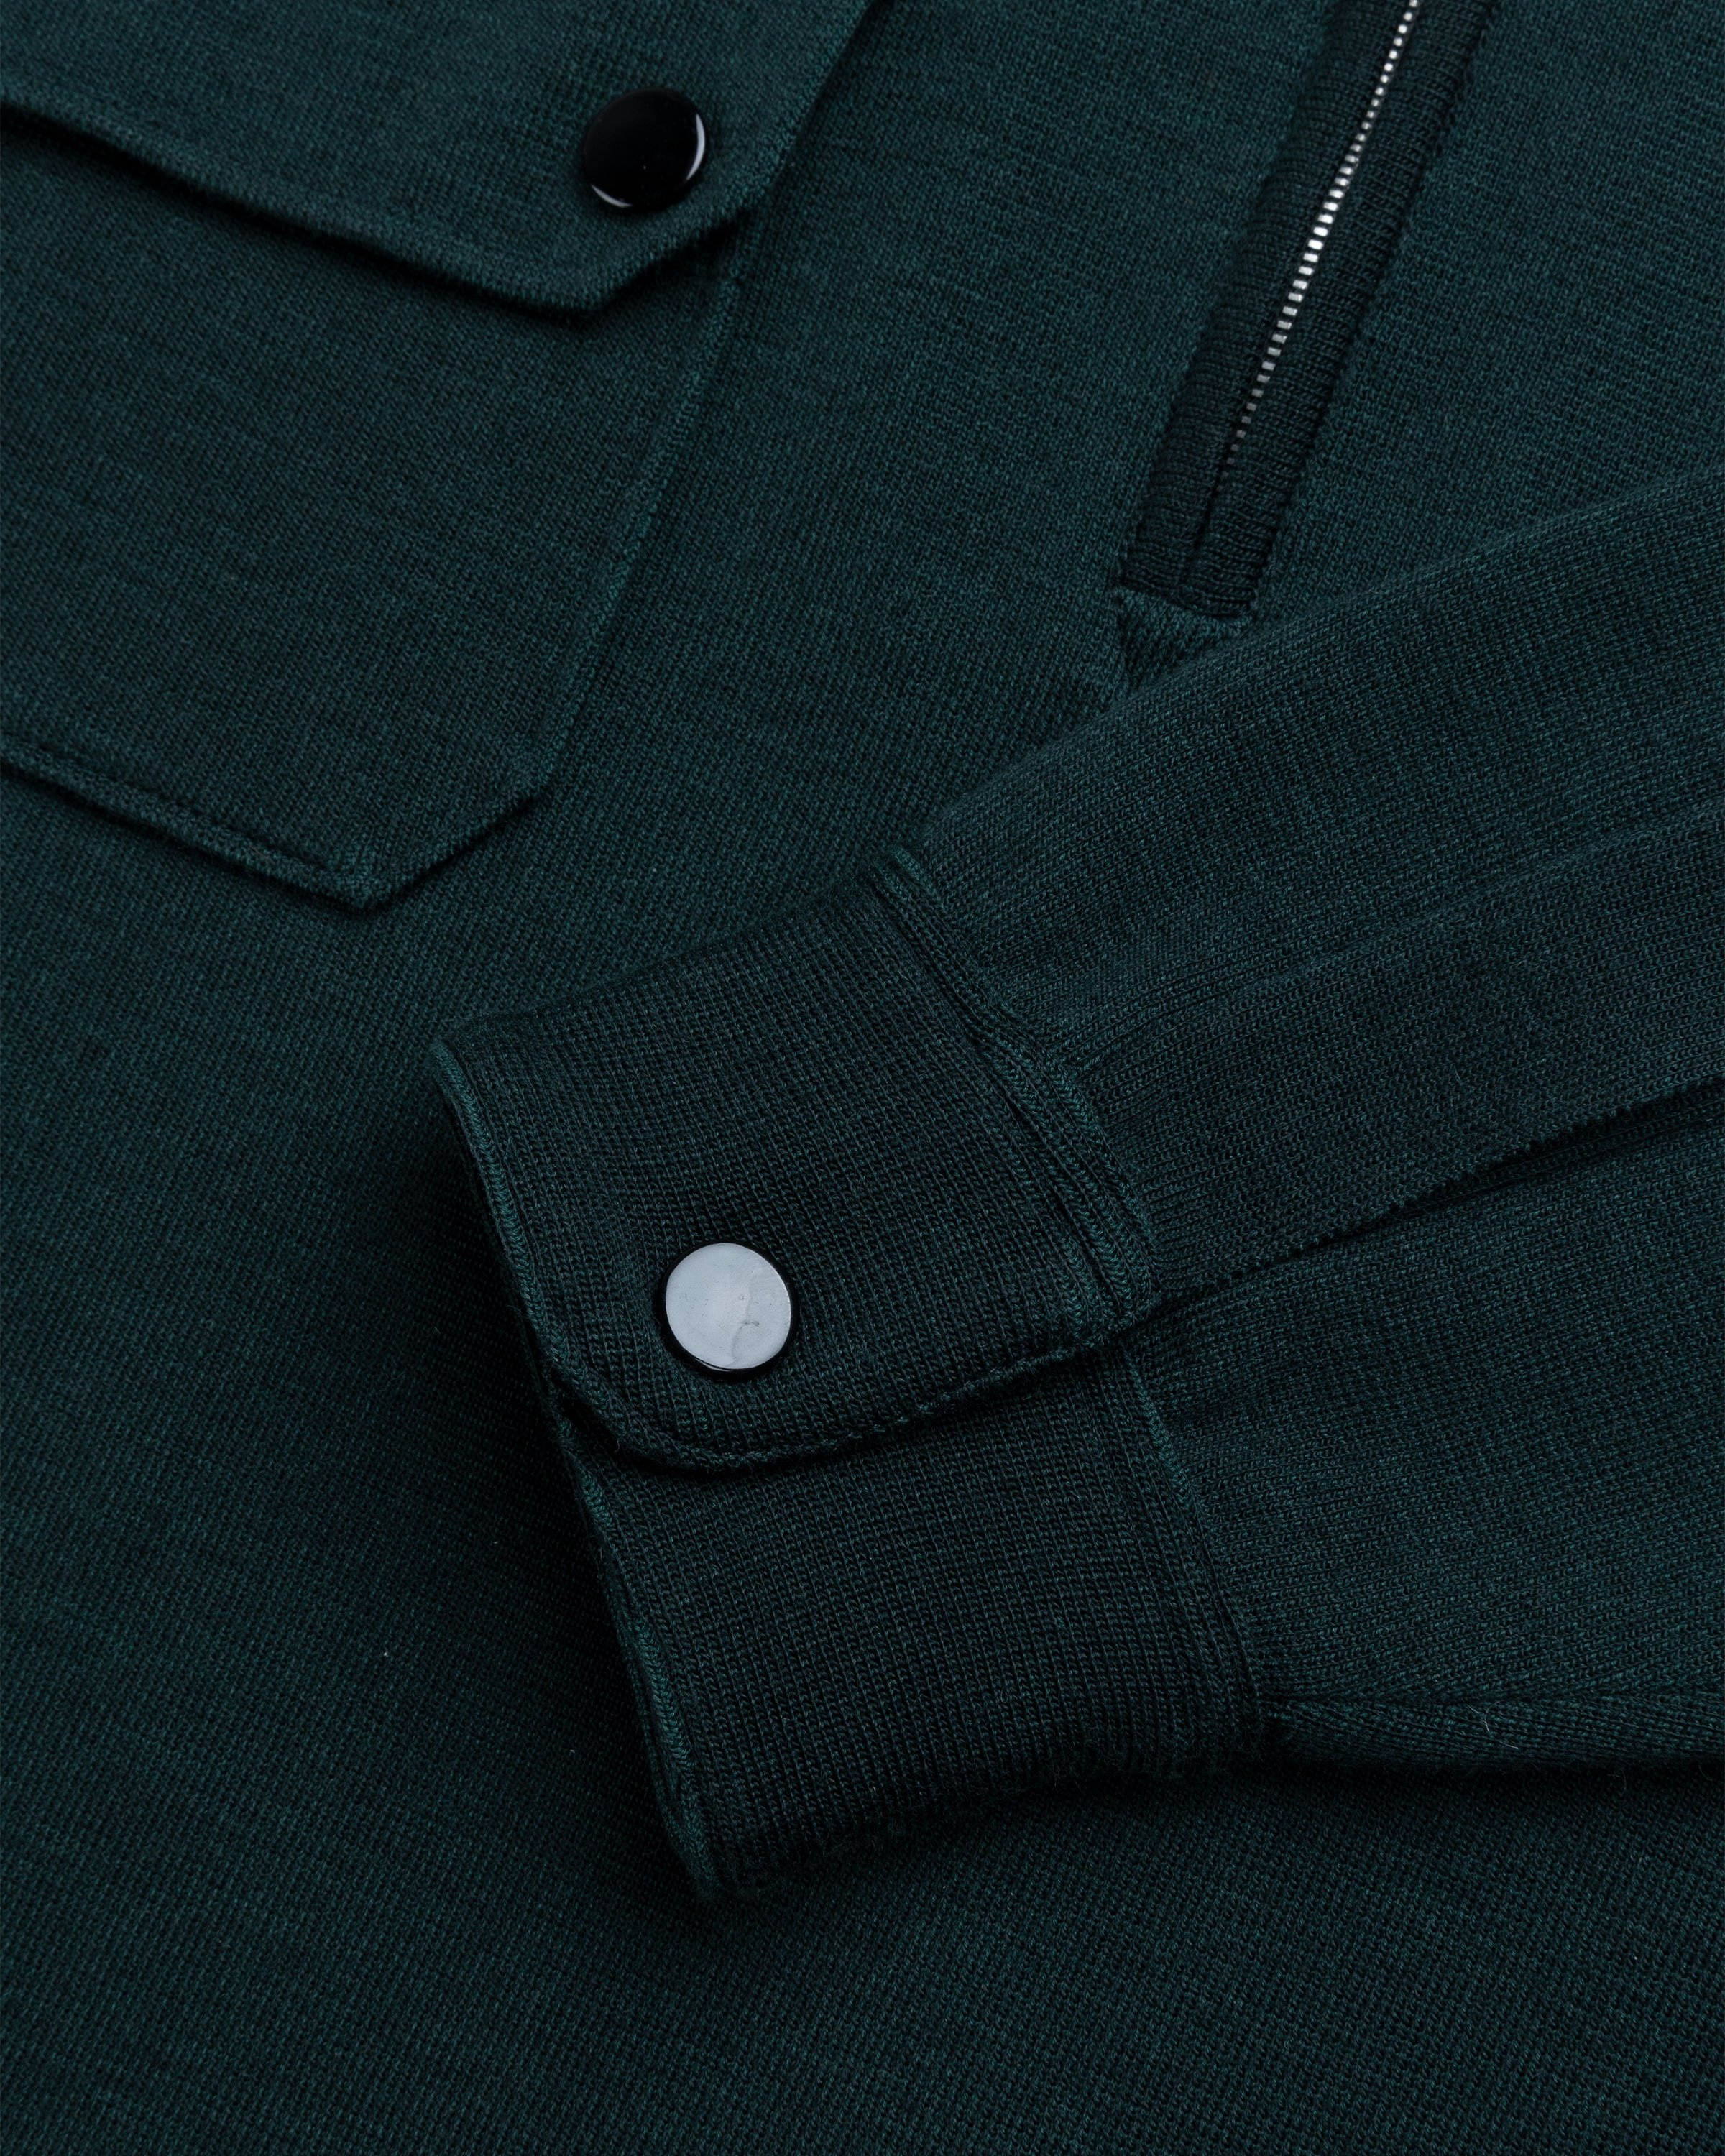 Maison Margiela - Longsleeve Polo Shirt Green - Clothing - Green - Image 6